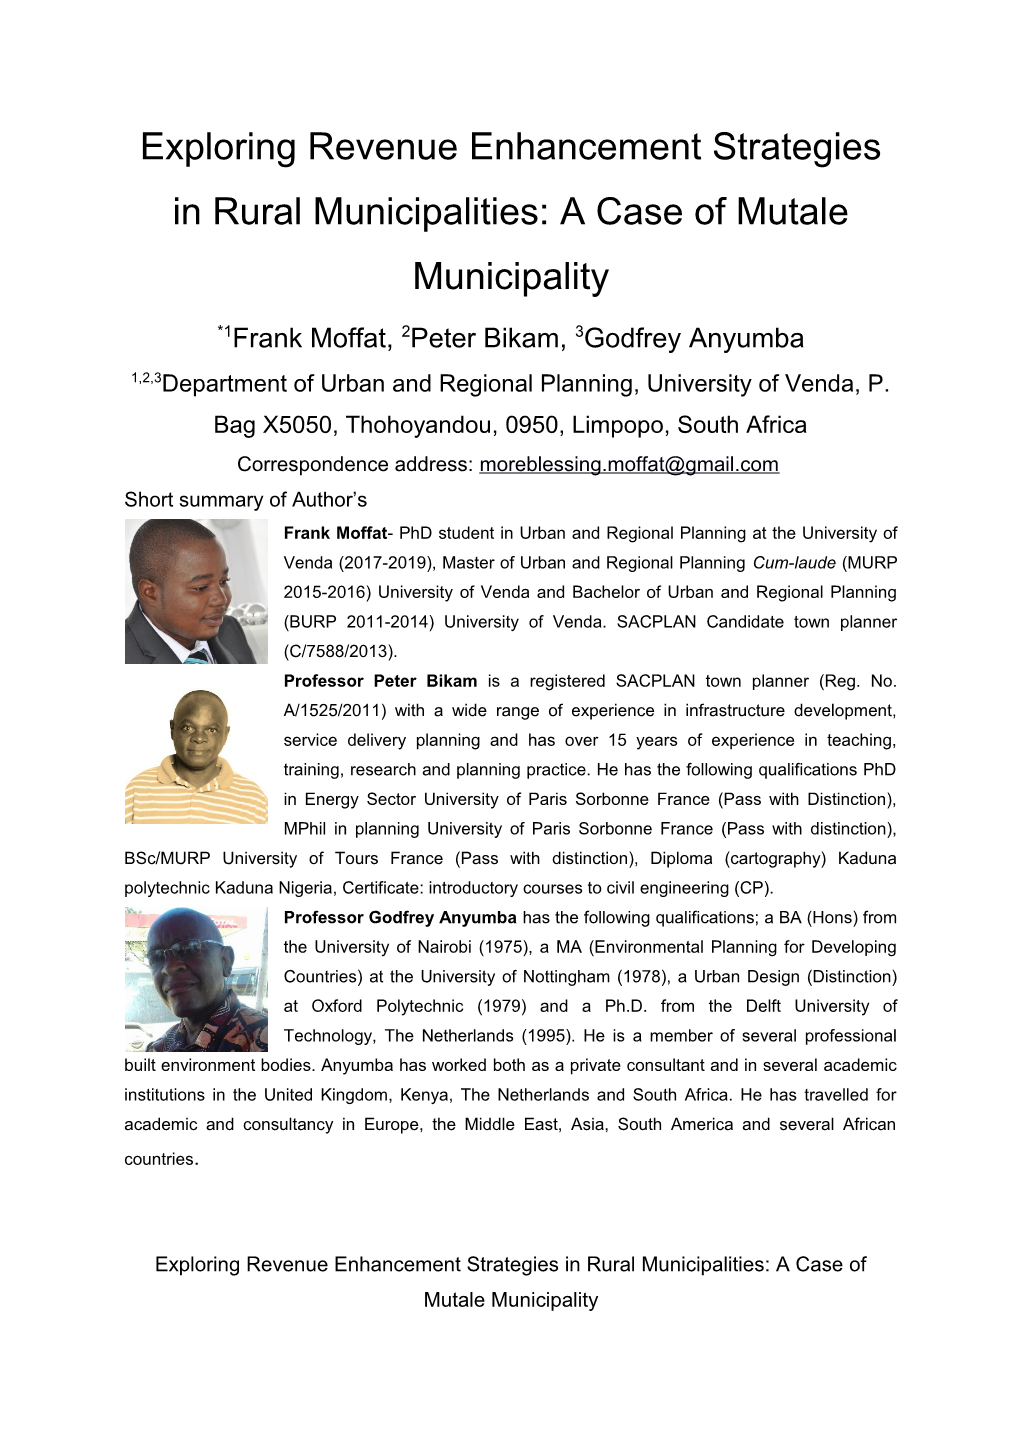 Exploring Revenue Enhancement Strategies in Rural Municipalities: a Case of Mutale Municipality